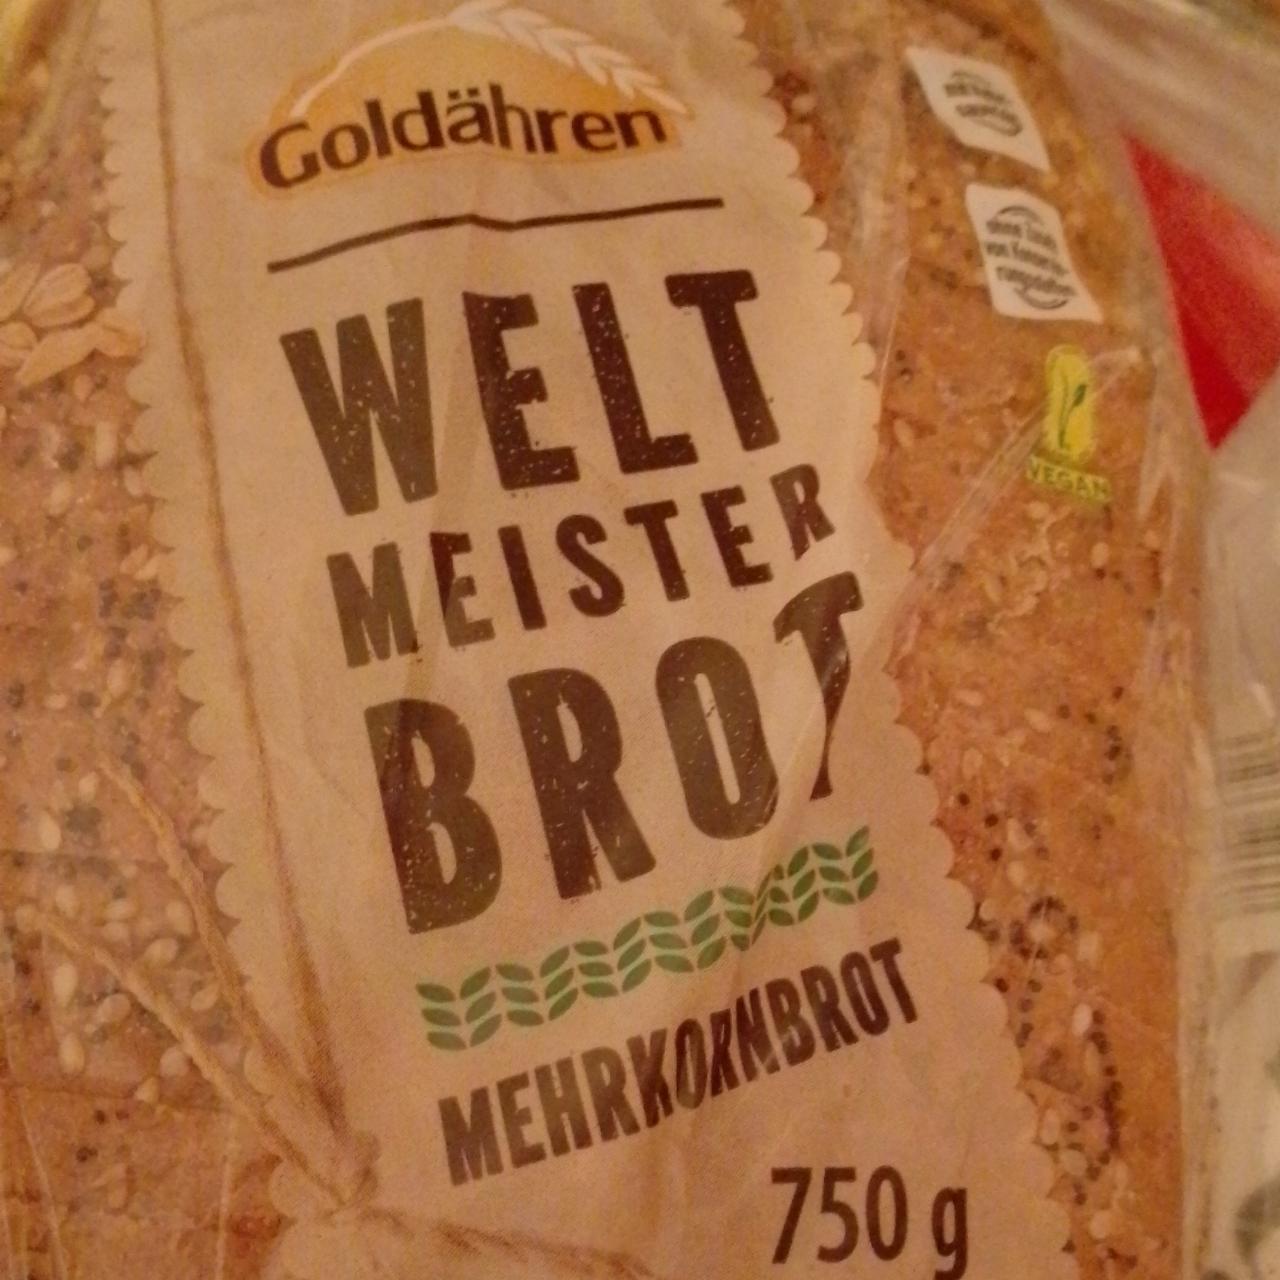 Фото - Welt Meister Brot Mehrkornbrot Goldähren